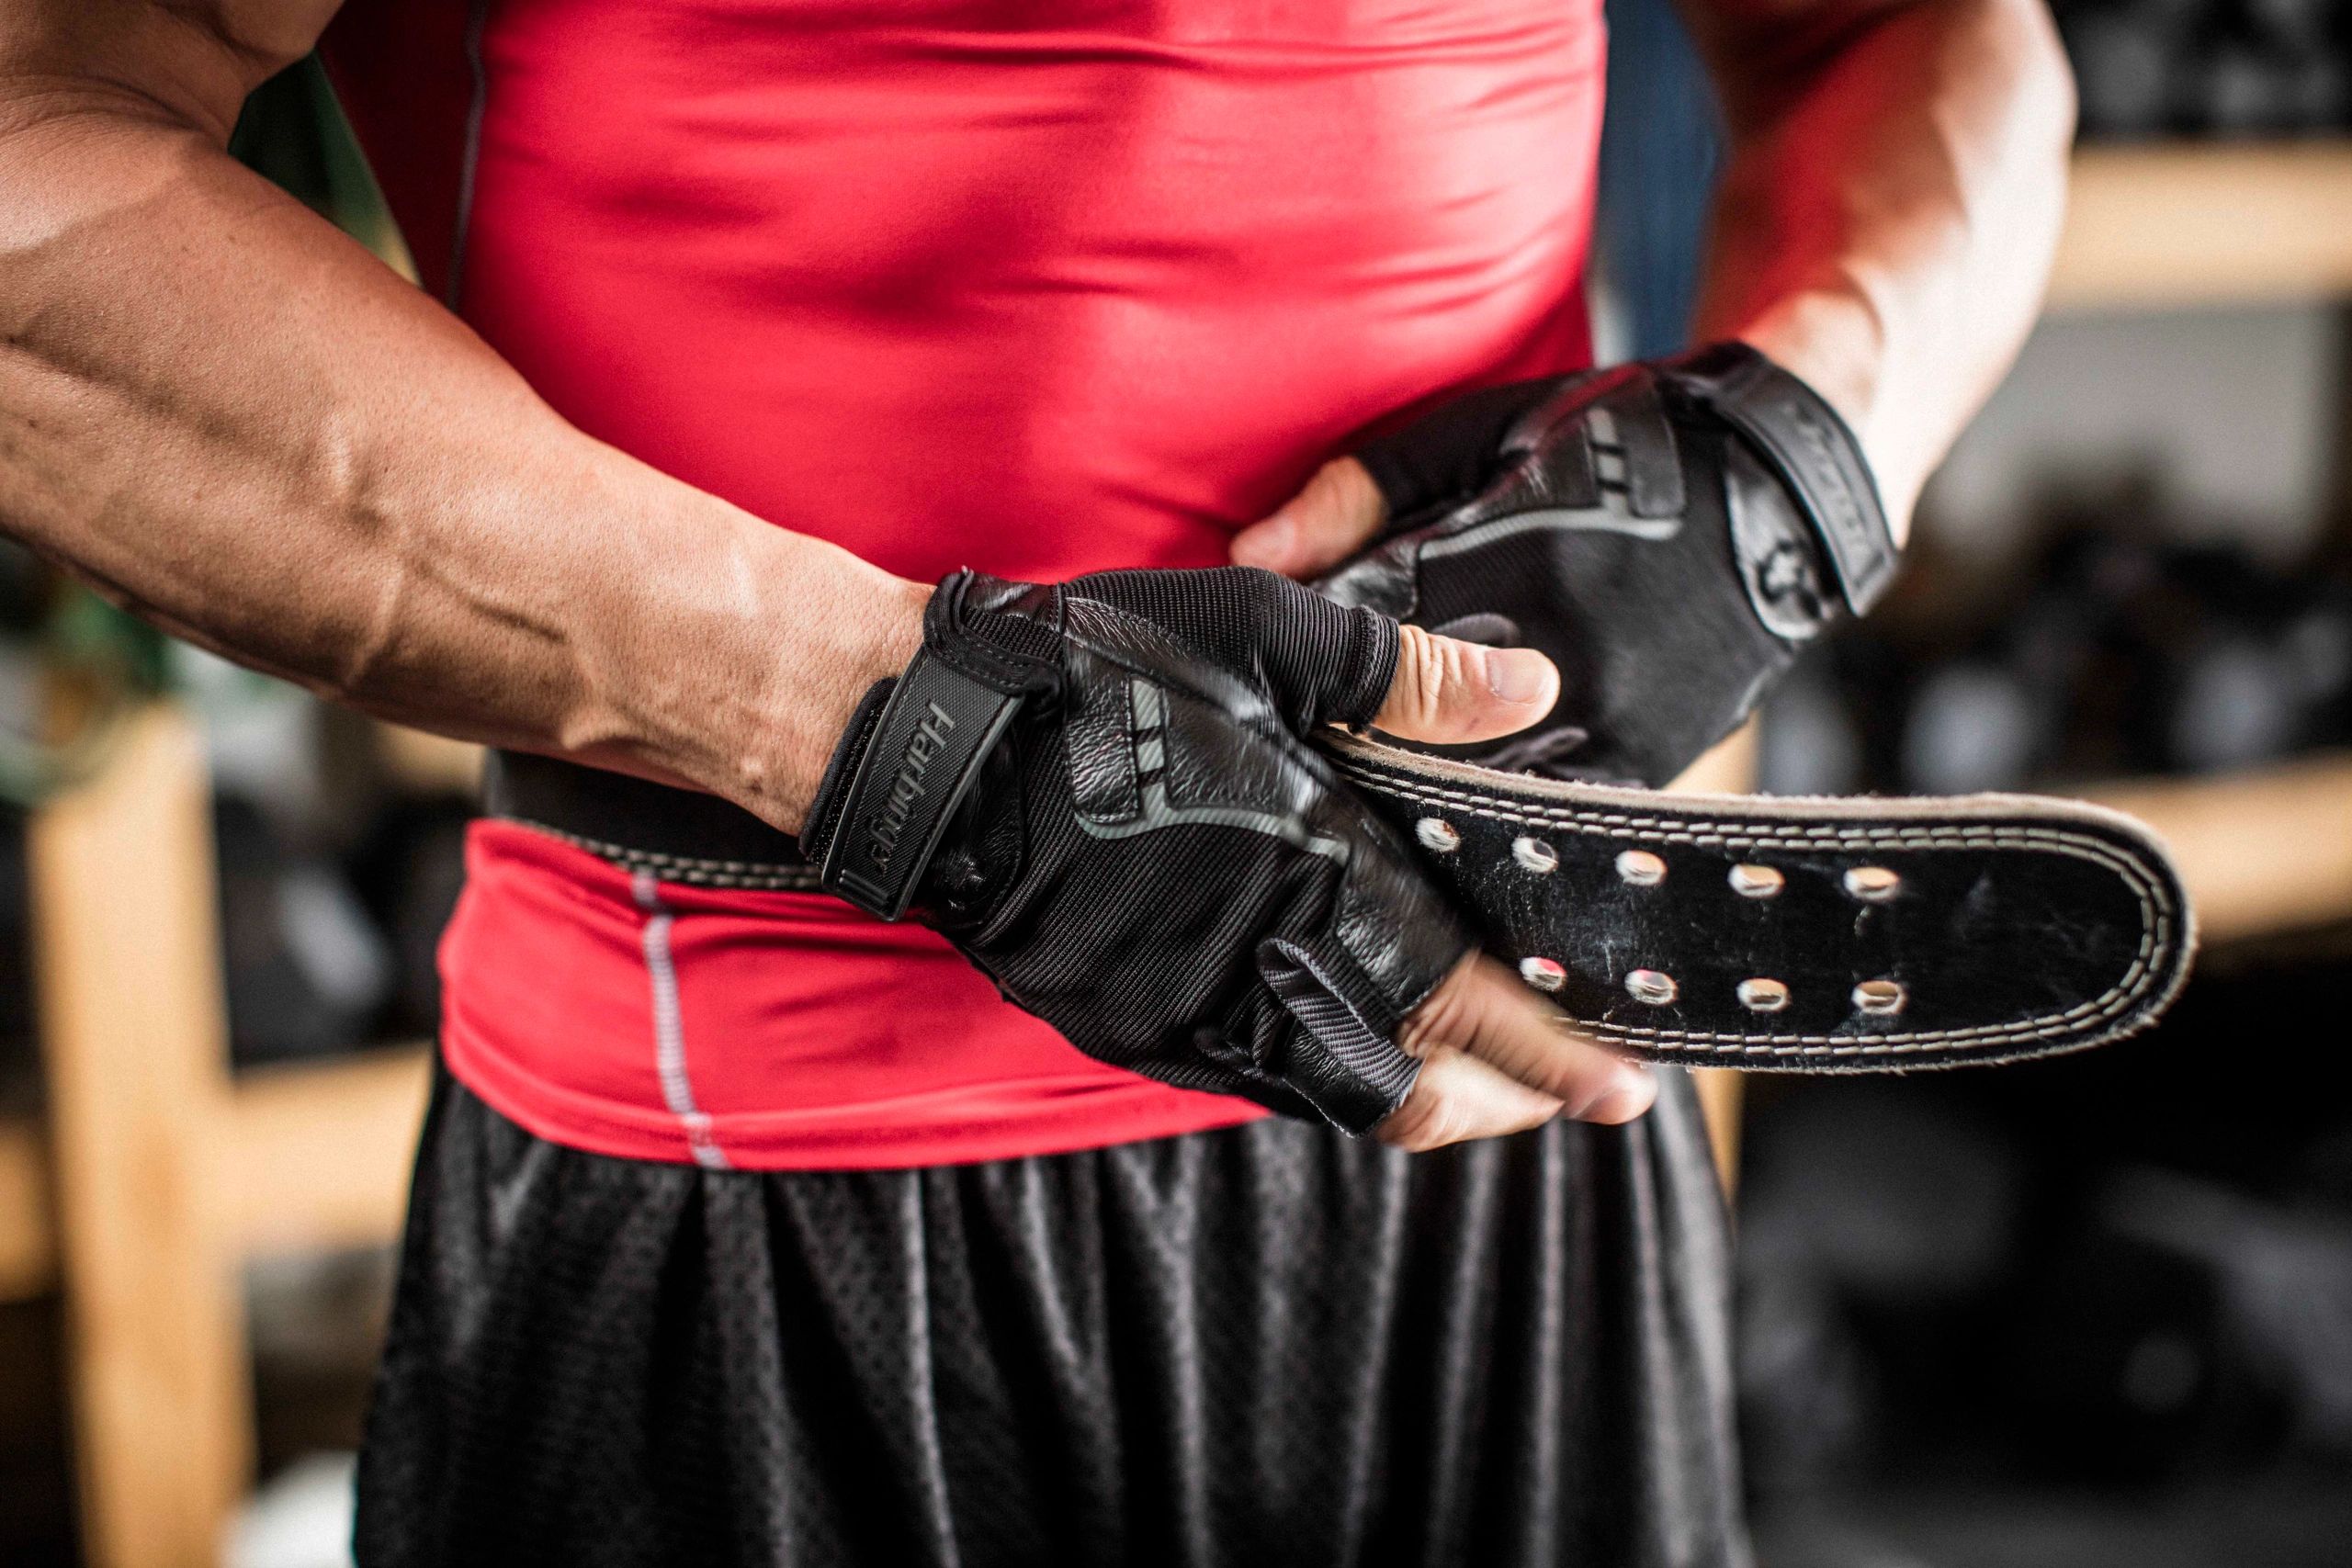 Harbinger Unisex Pro Wrist Wrap Weight Lifting Gloves - Small - Tan Camo